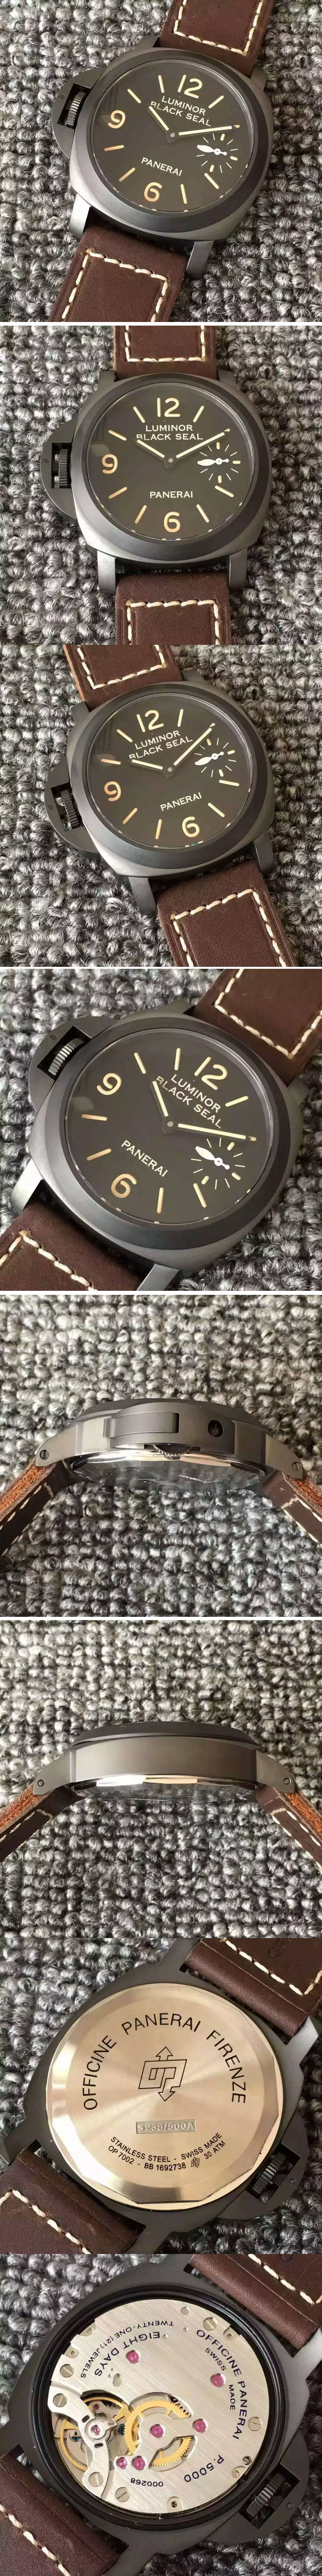 Replica Panerai Watches